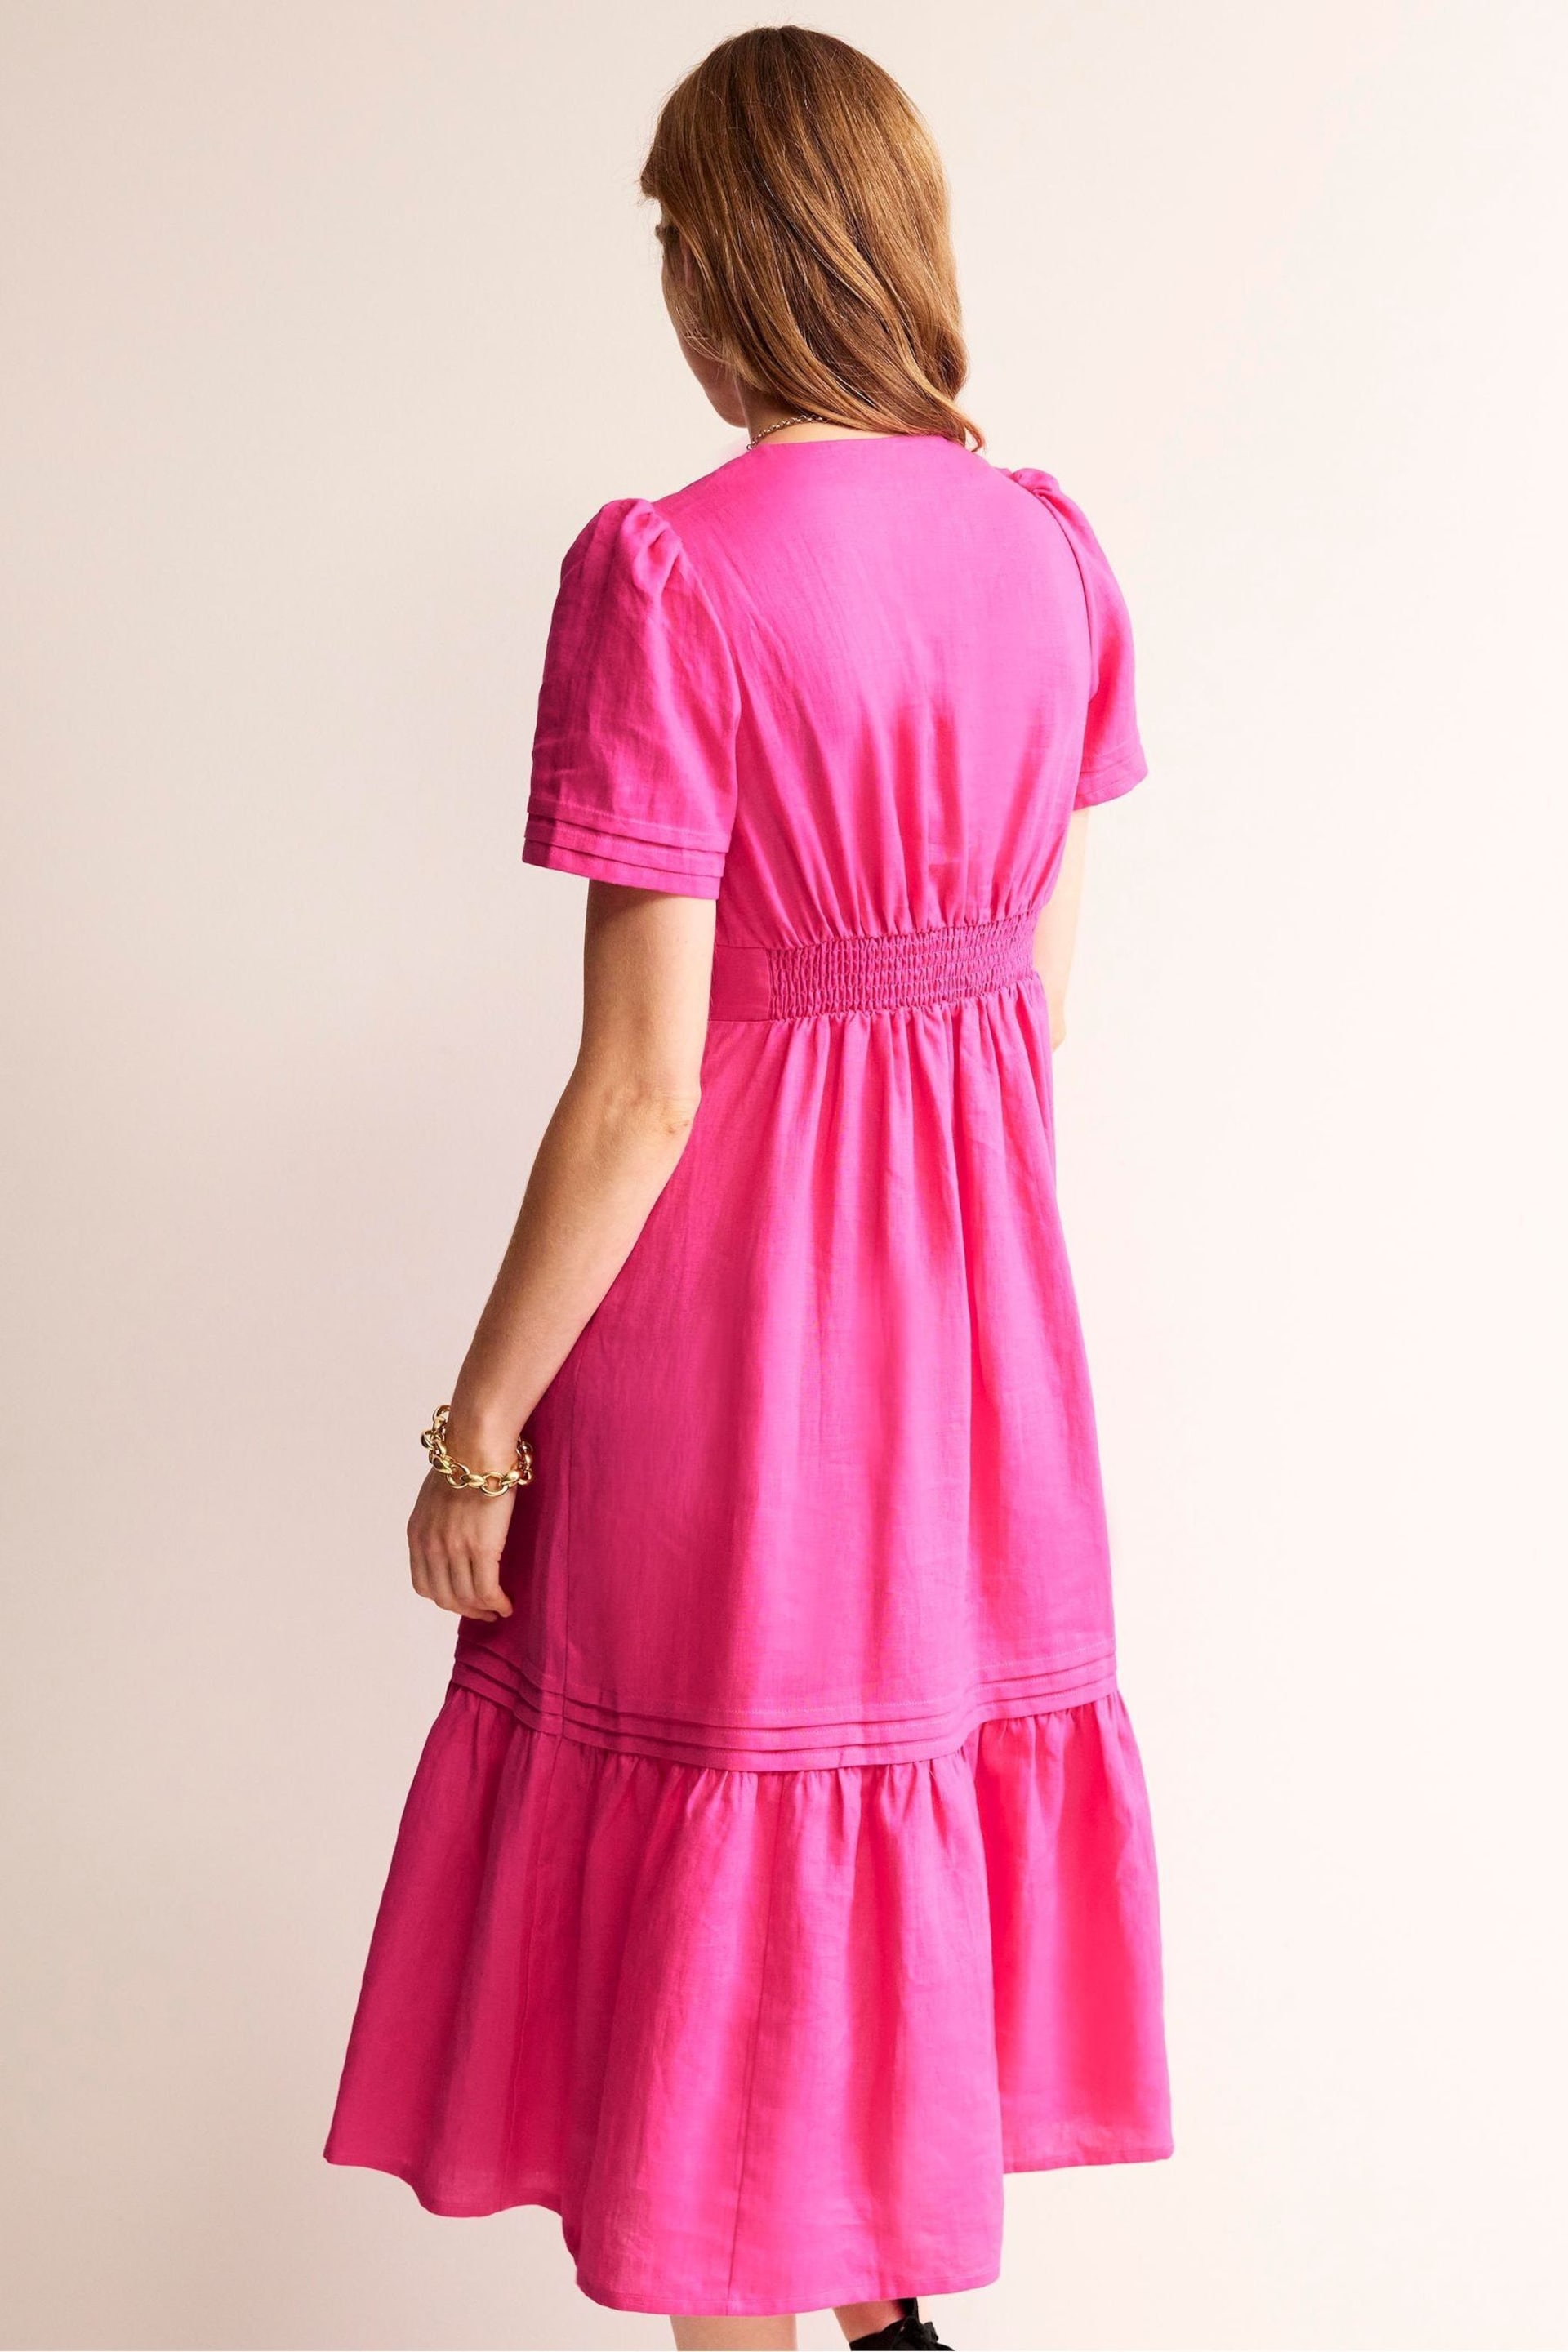 Boden Pink Eve Linen Midi Dress - Image 3 of 4